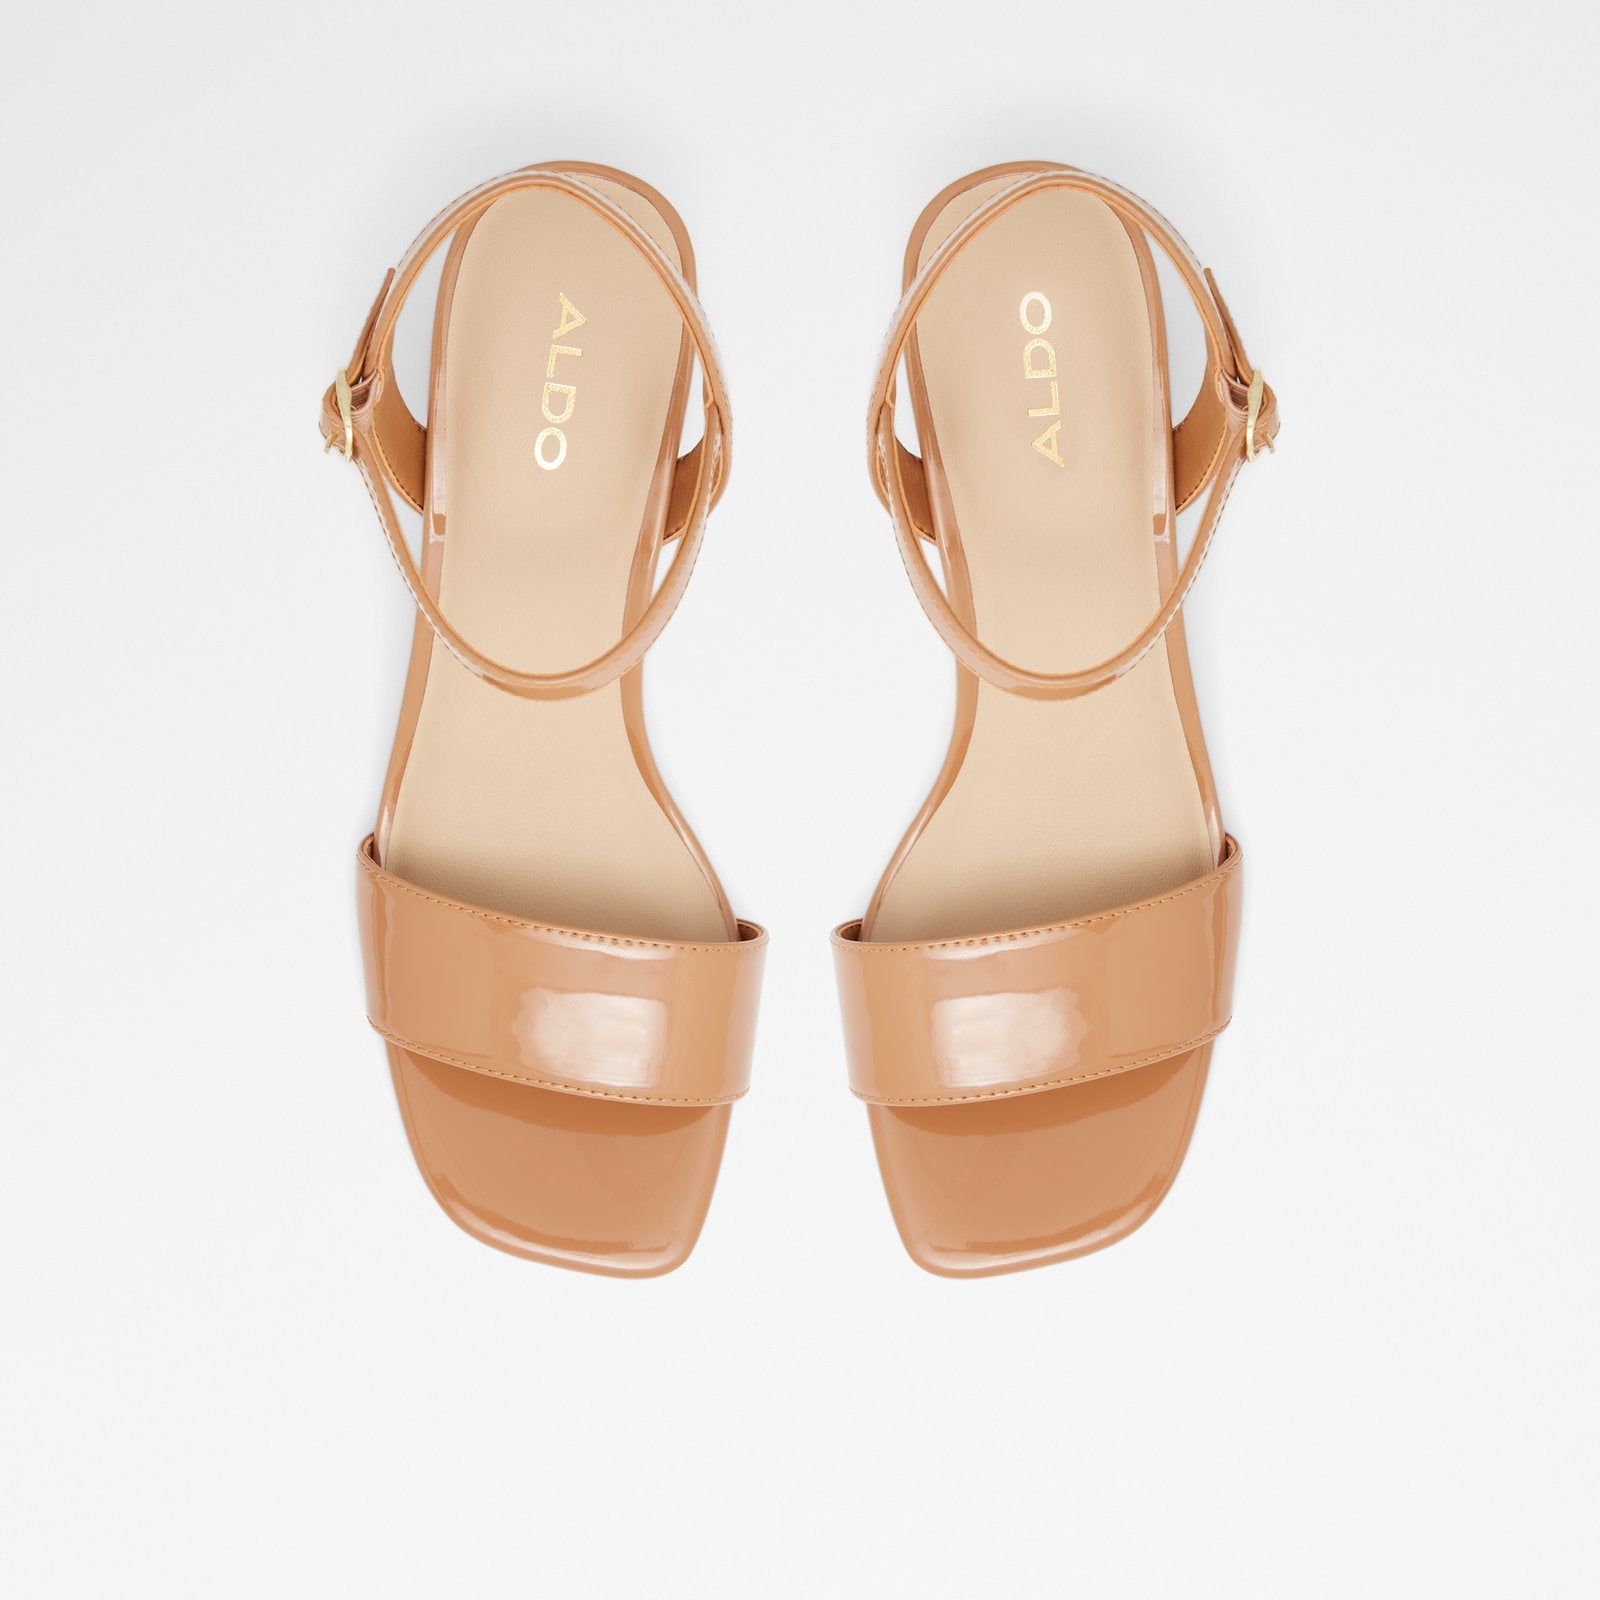 Gleawia Women Shoes - Light Brown - ALDO KSA